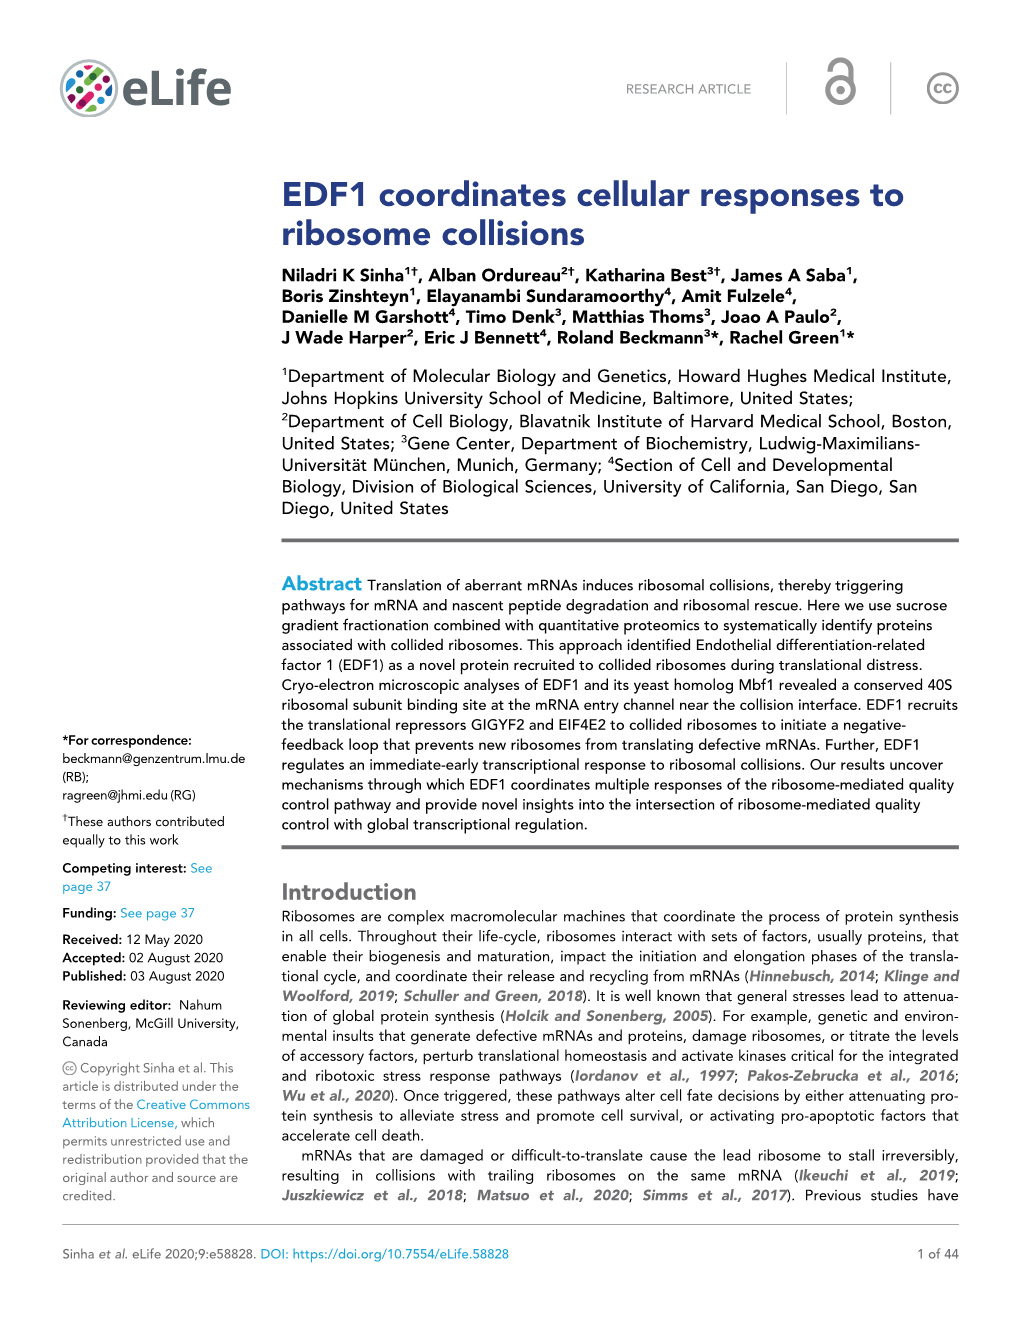 EDF1 Coordinates Cellular Responses to Ribosome Collisions